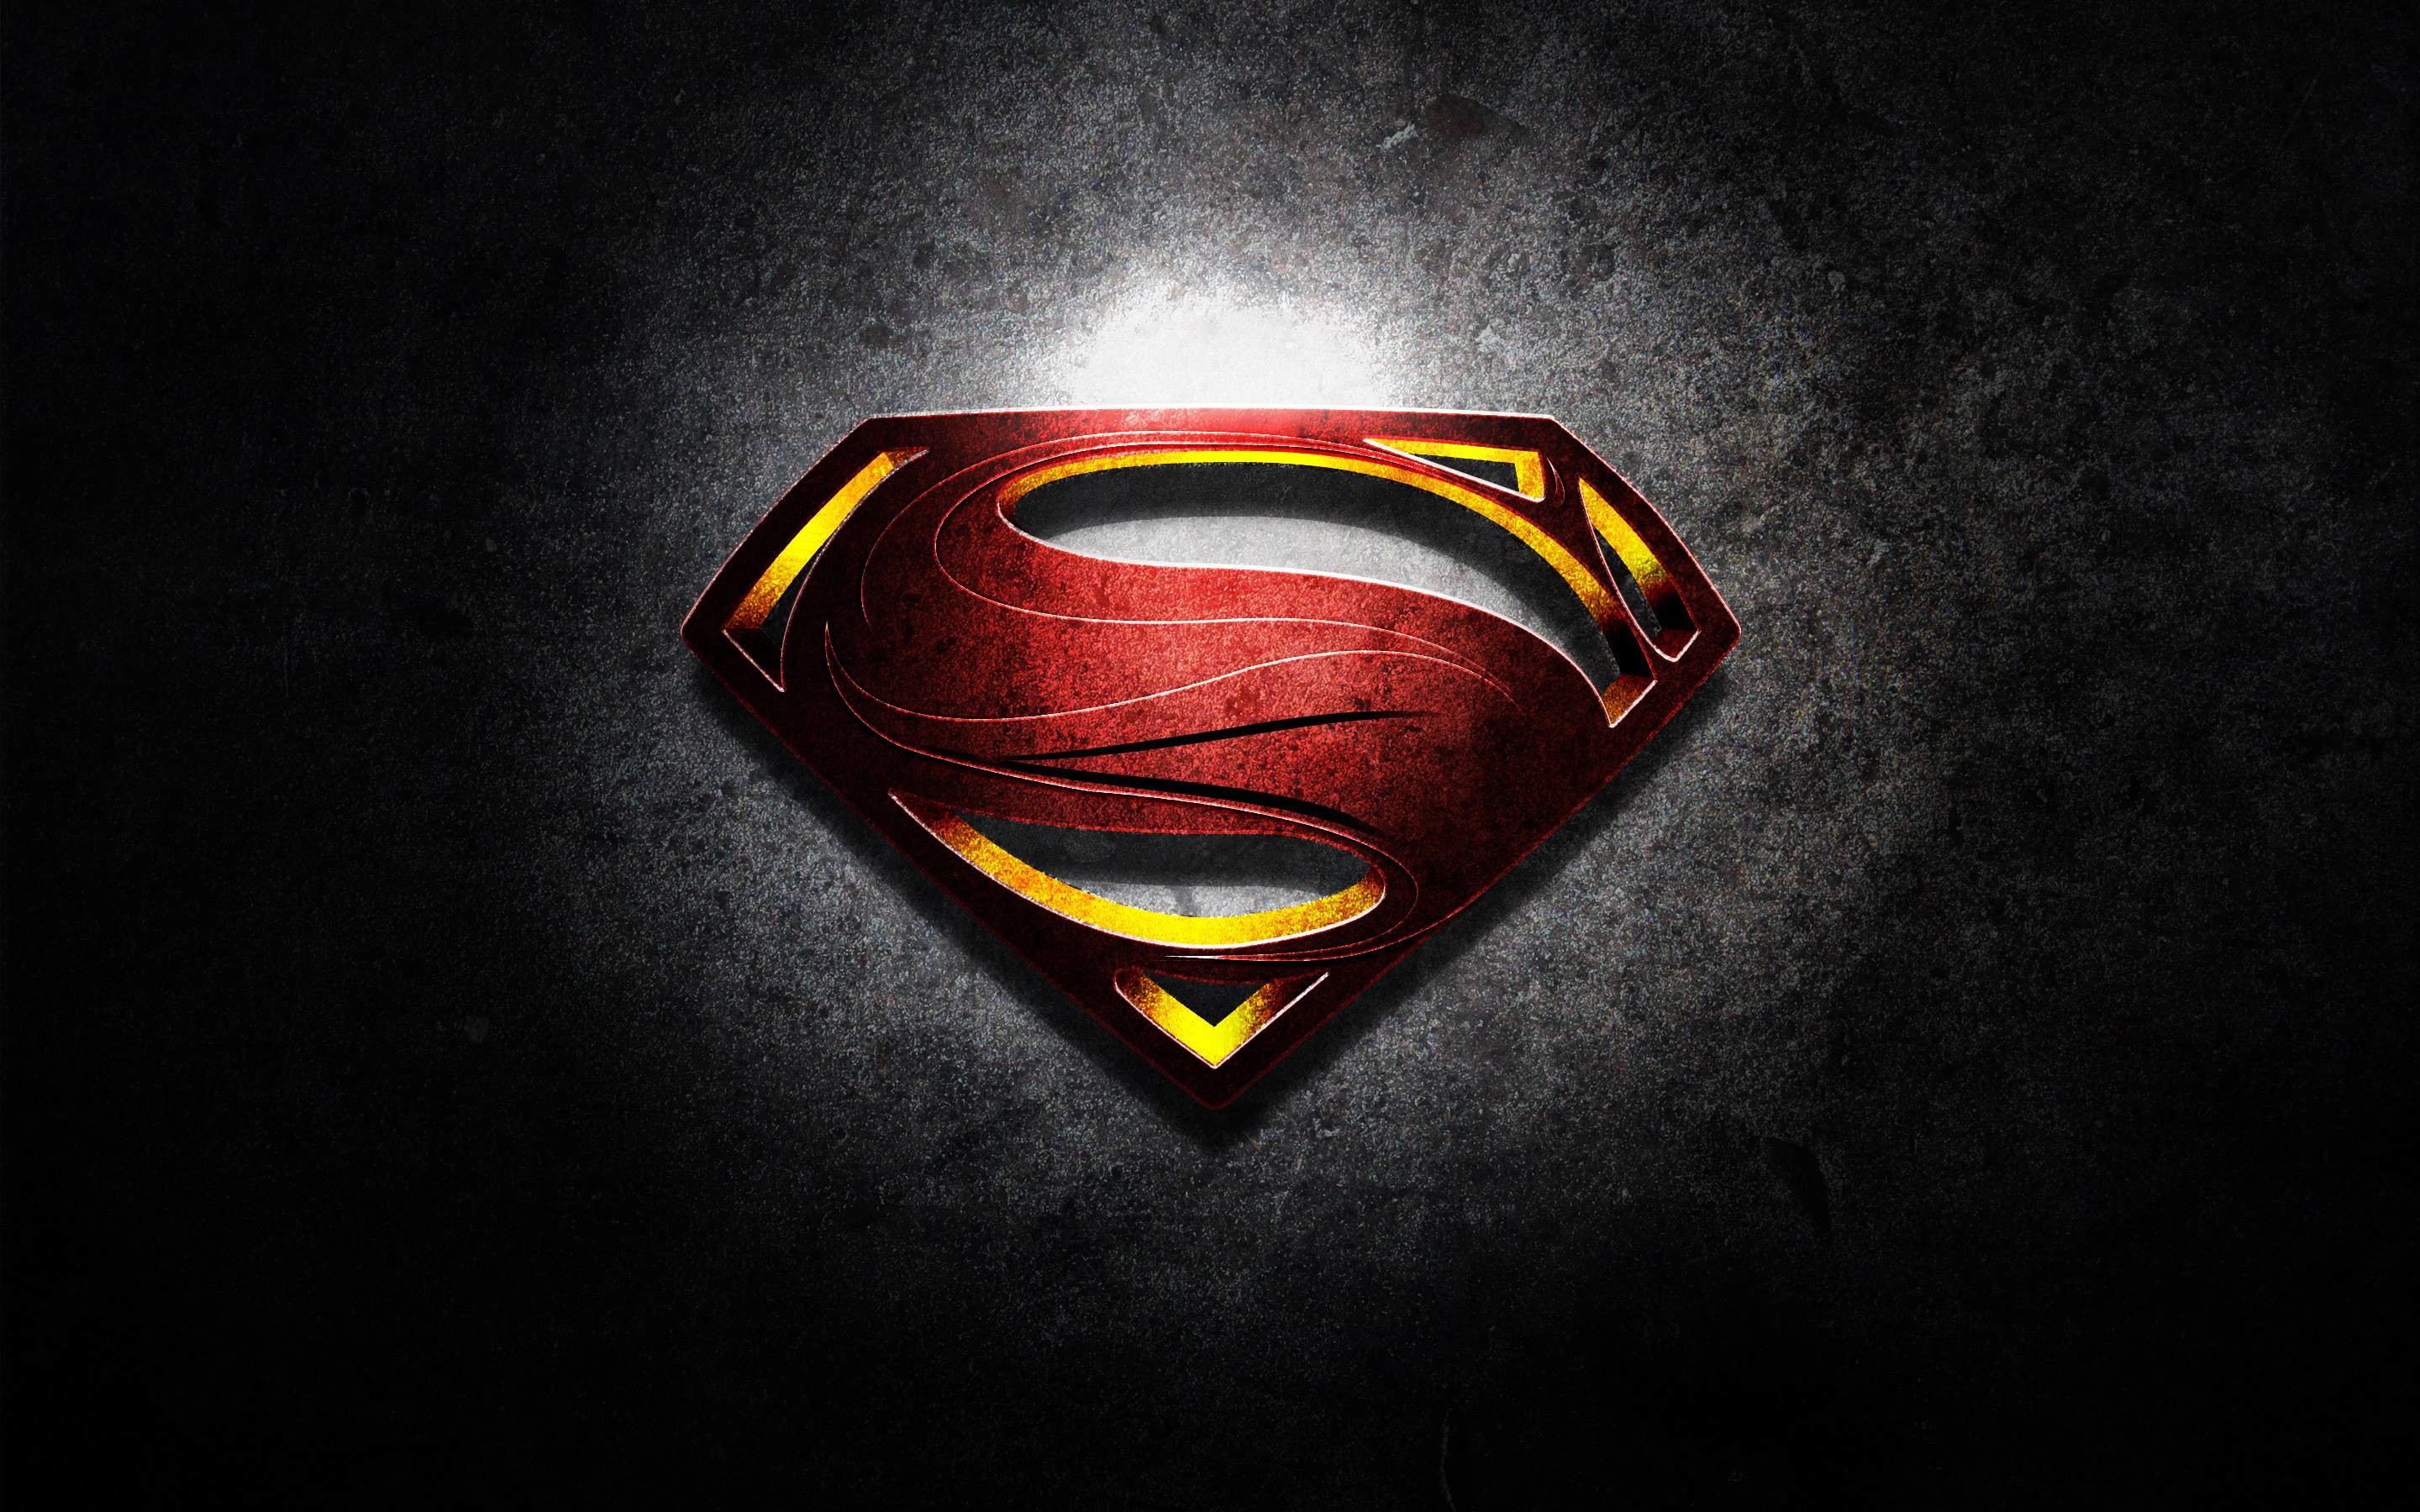 2880x1800 Superman Logo Wallpapers - Full HD wallpaper search